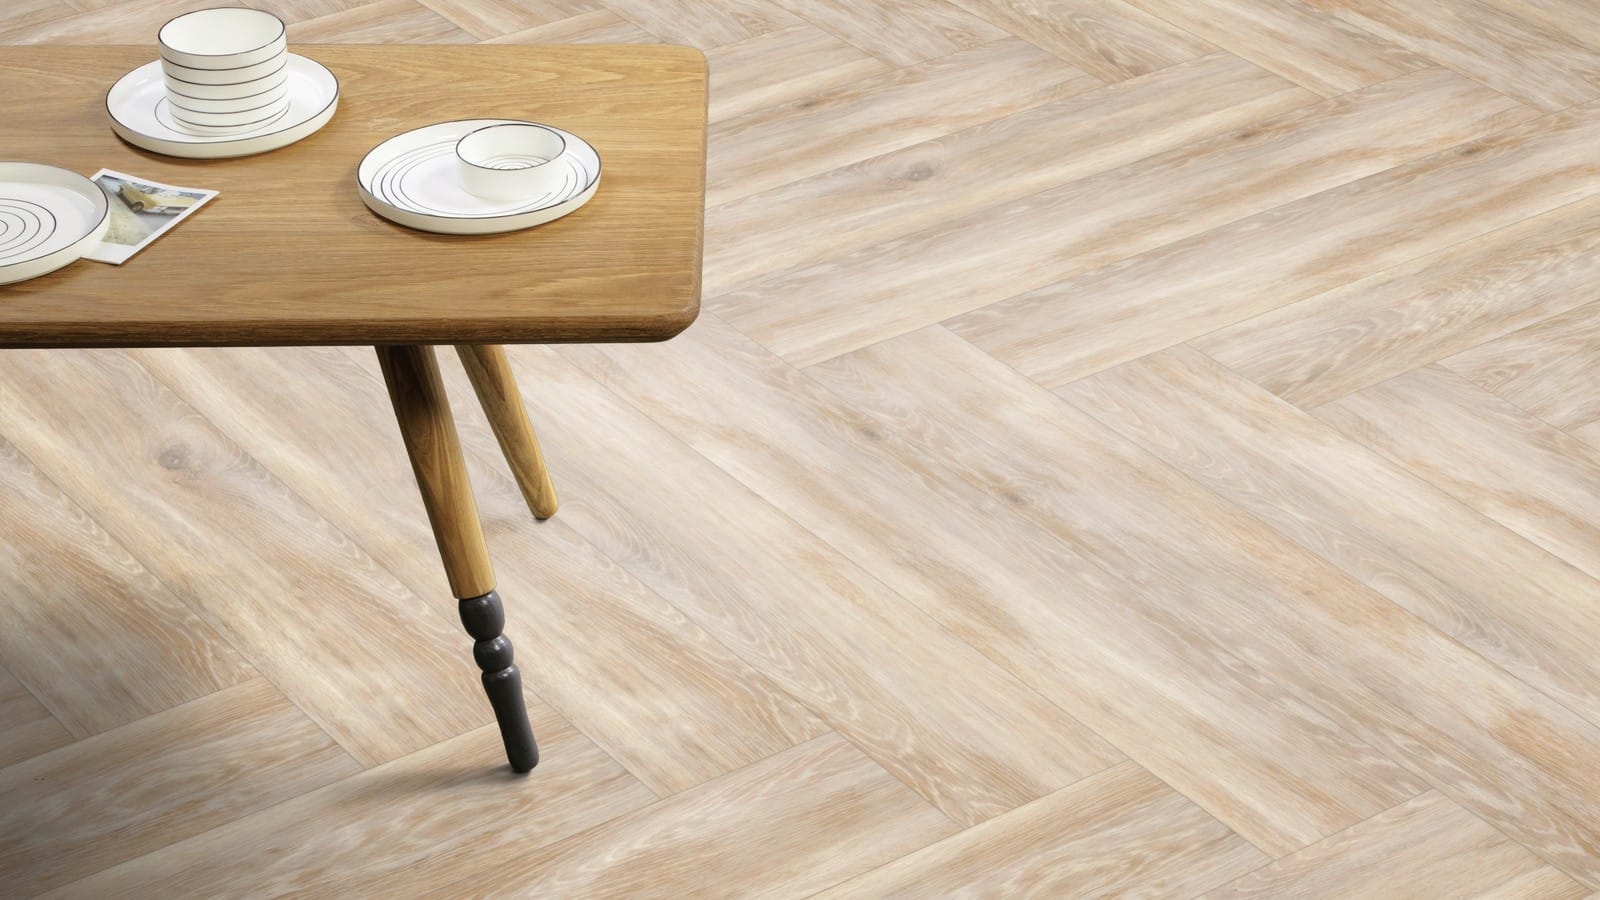 The Herringbone Plank design of Lime Washed Wood luxury vinyl tile by Amtico